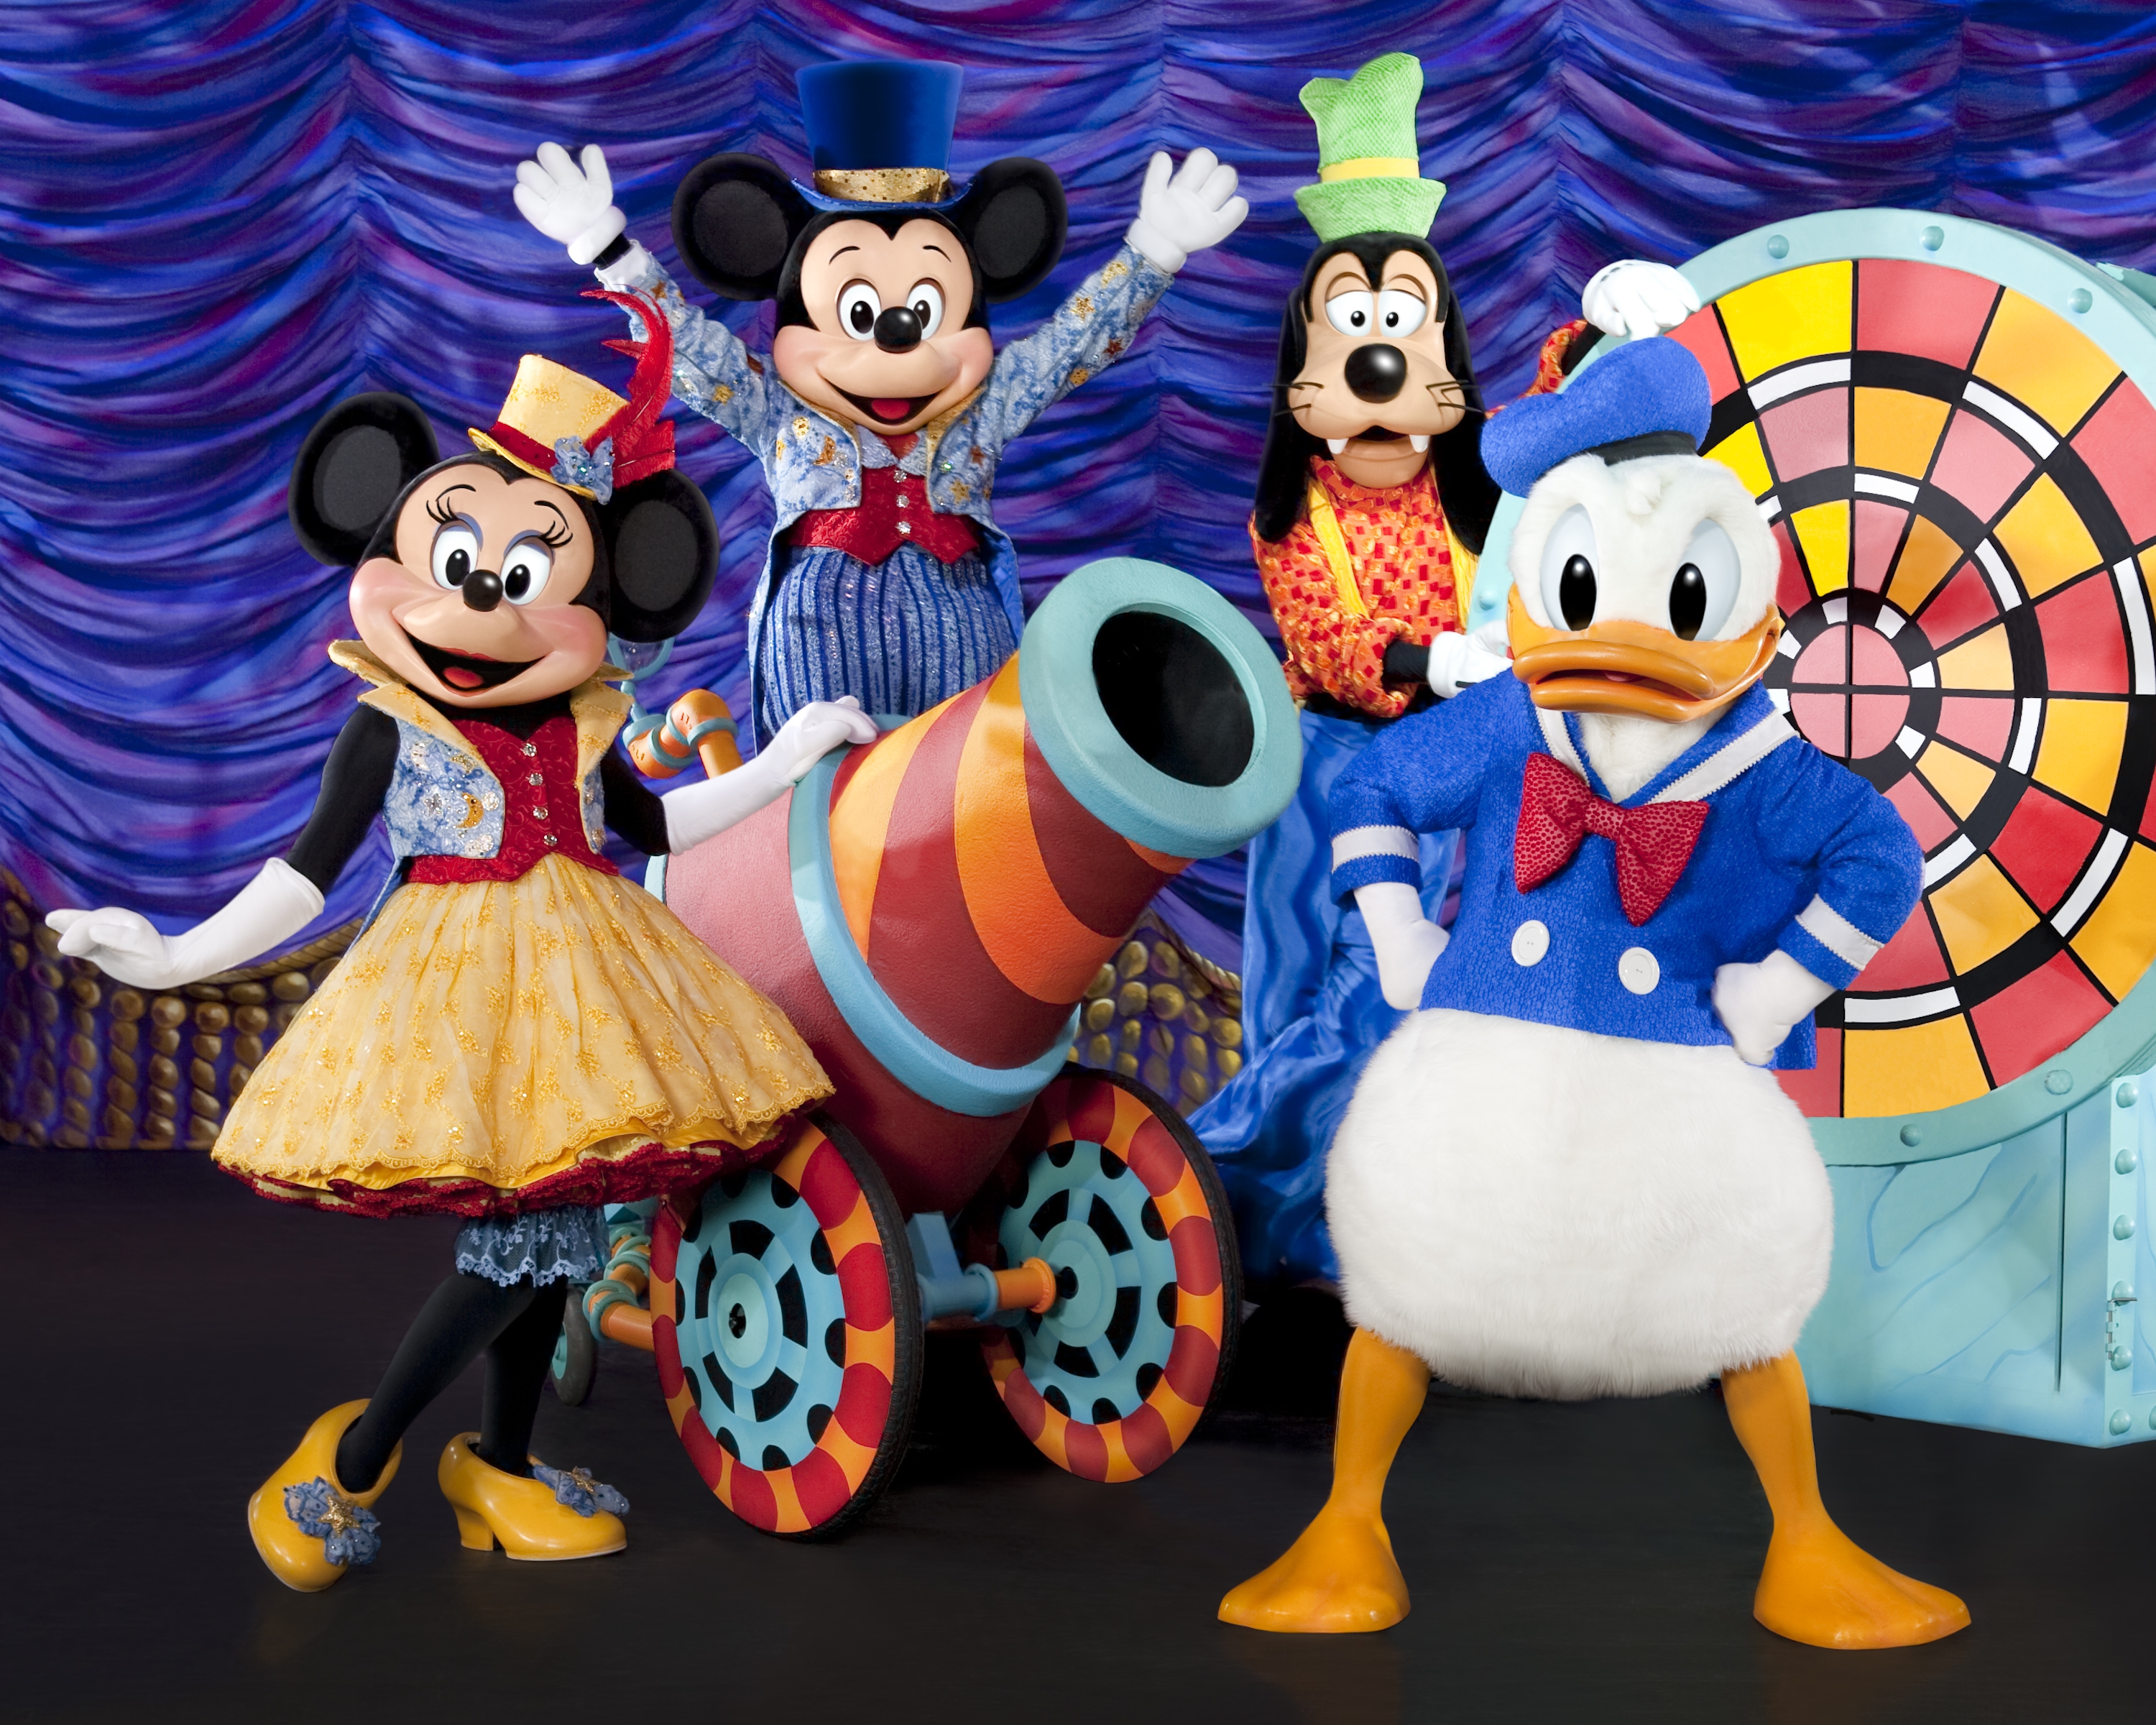 Disney Live! Mickey’s Magic Show